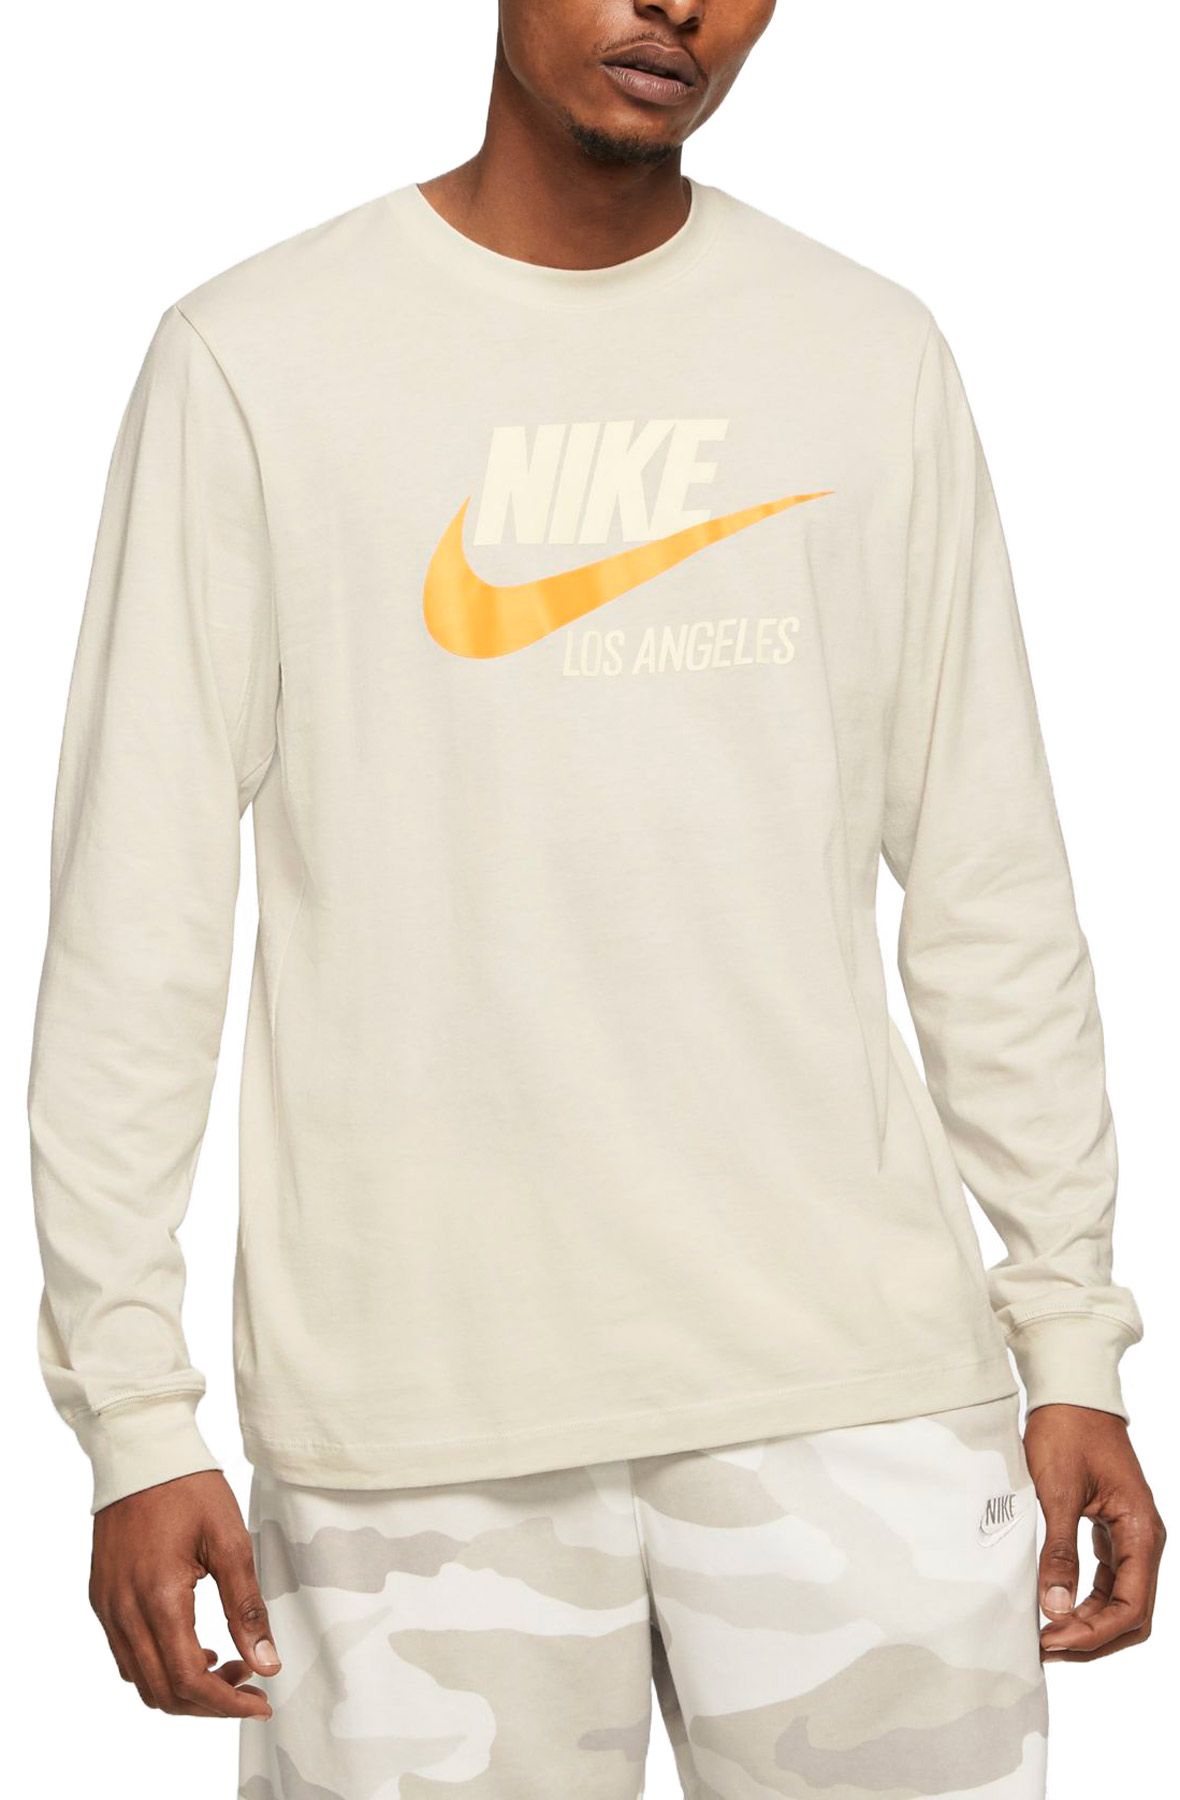 NIKE Sportswear Los Angeles Long Sleeve T-Shirt CW2301 072 - Shiekh